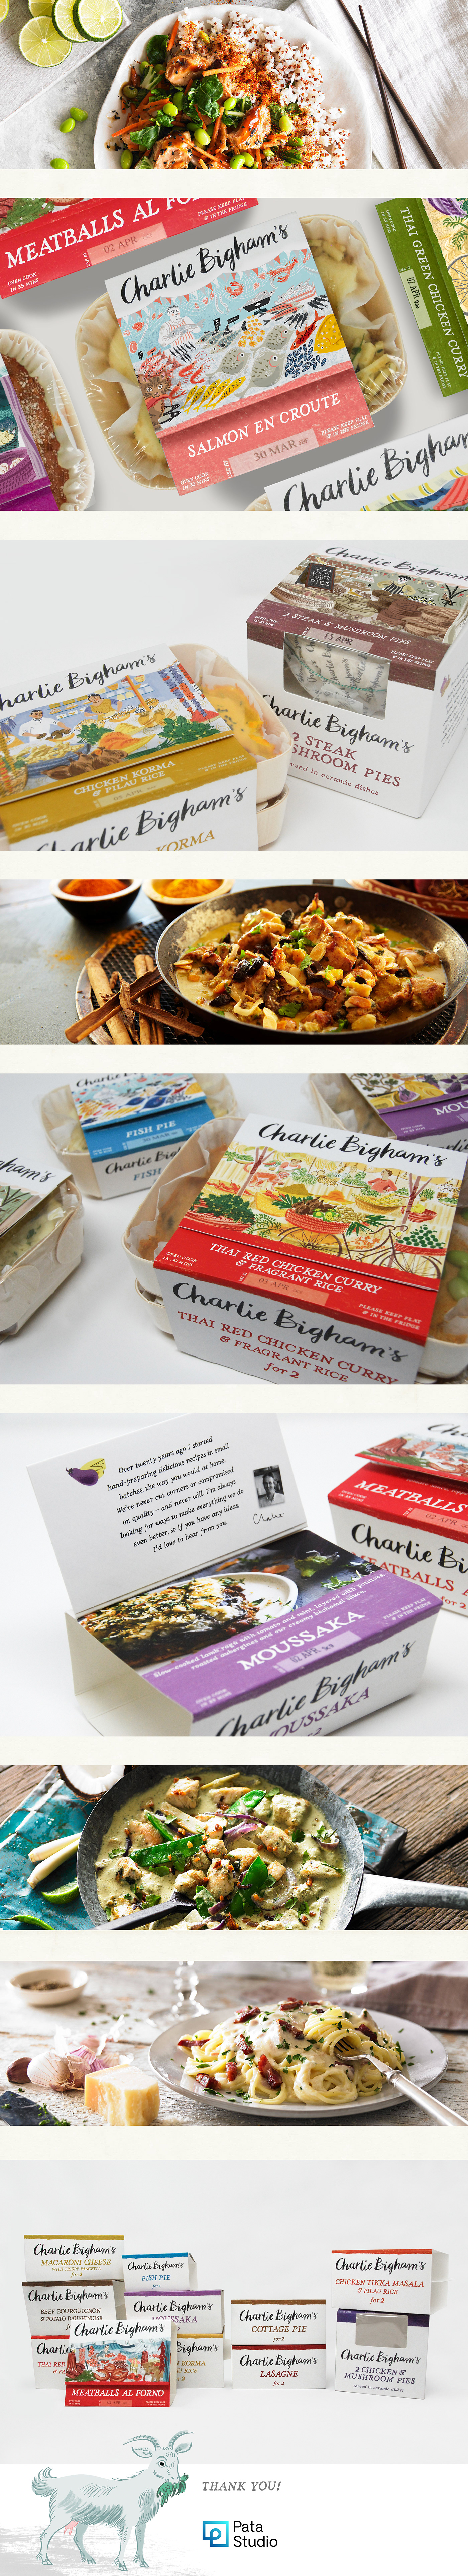 bigham's Packaging ILLUSTRATION  Charlie bigham's branding  brand identity Food  design graphicdesign